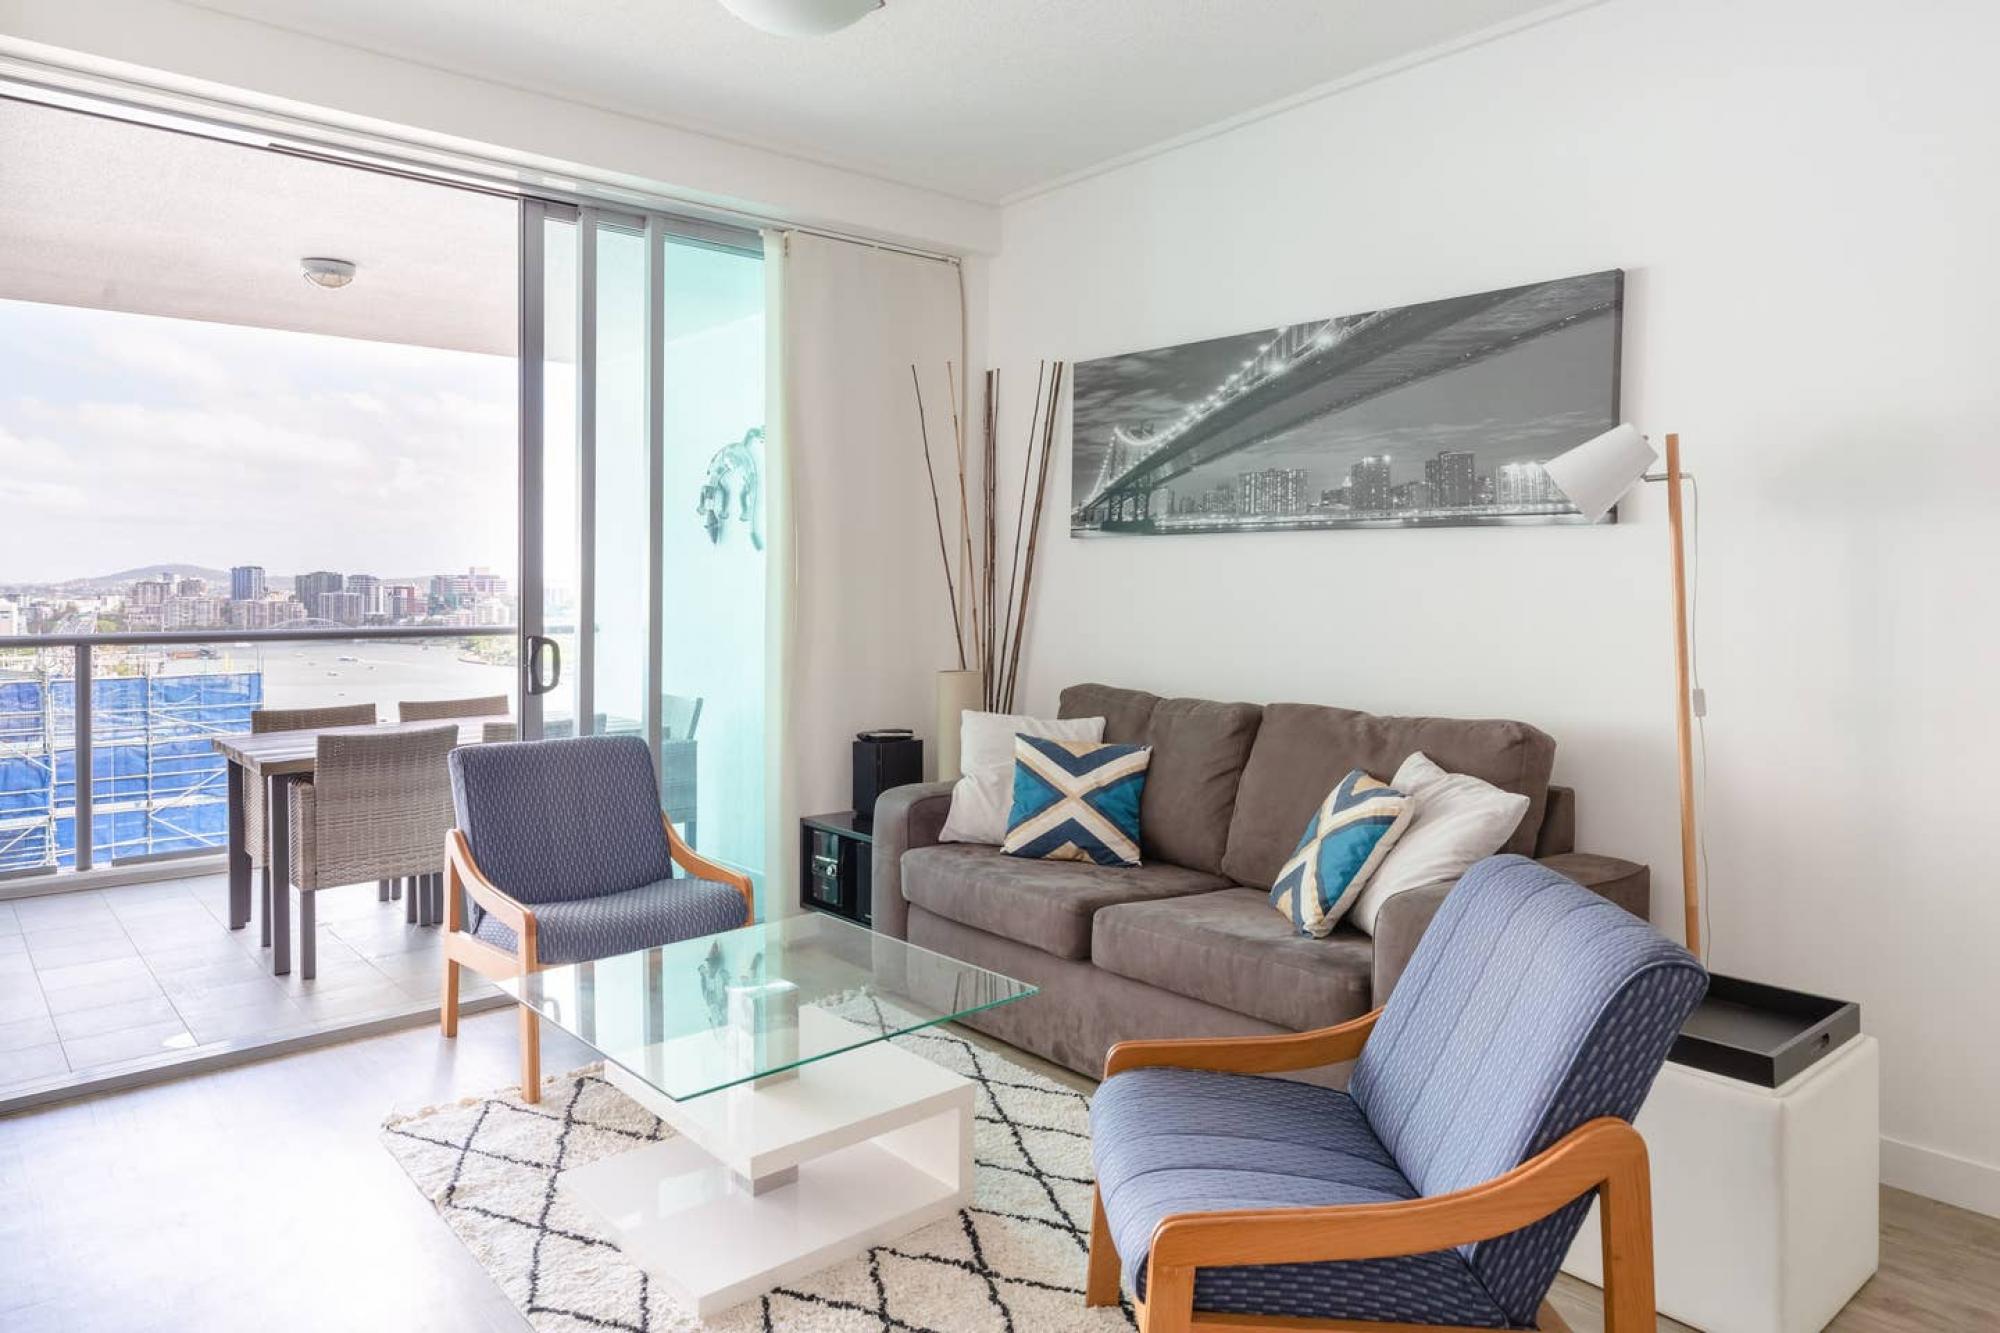 Premium 2br Cbd Apartment With River View Balcony - Australia